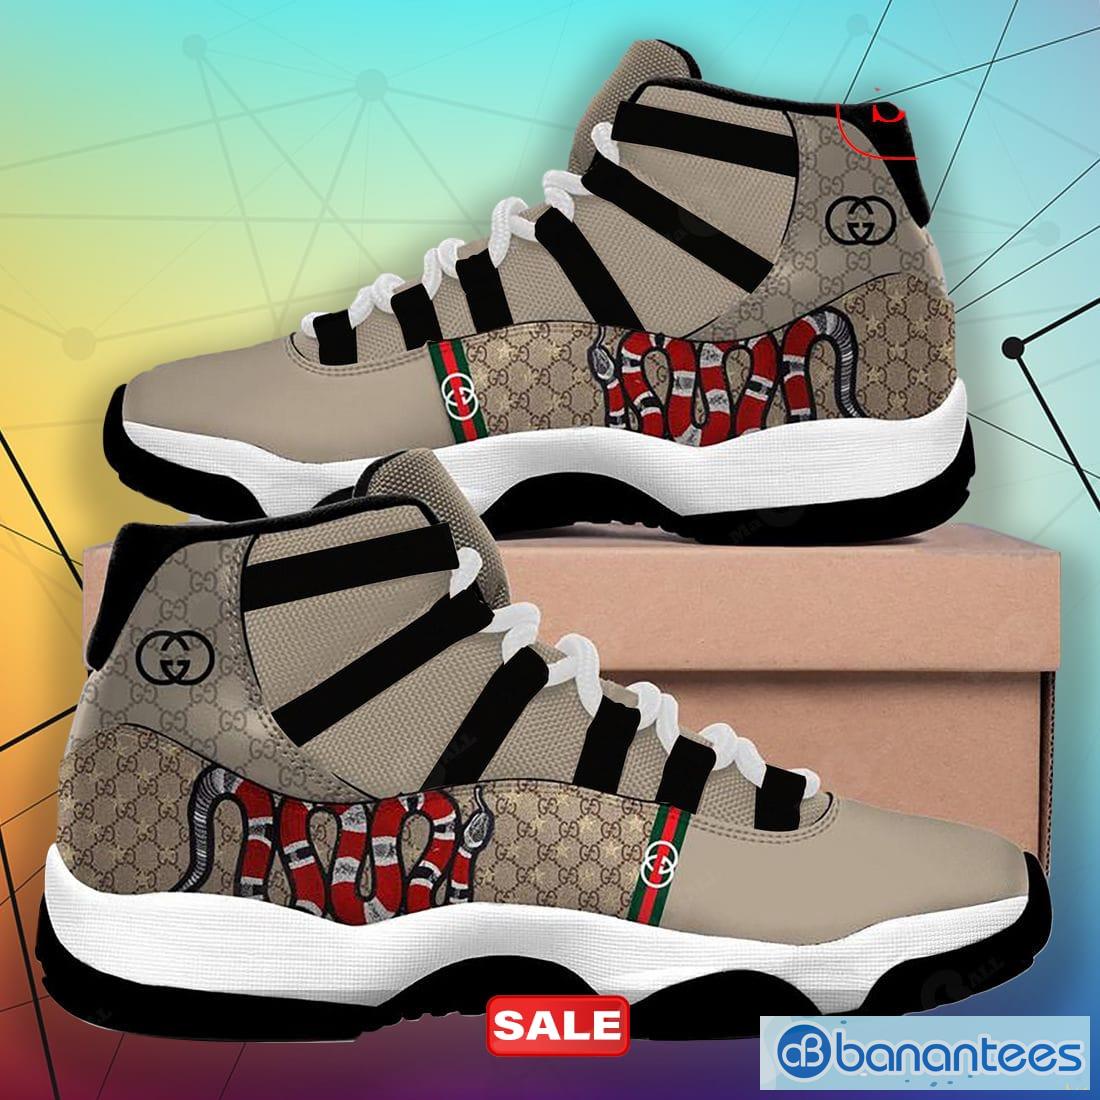 Gucci Snake Air Jordan Shoes Gifts For Men Women Sneakers - Banantees